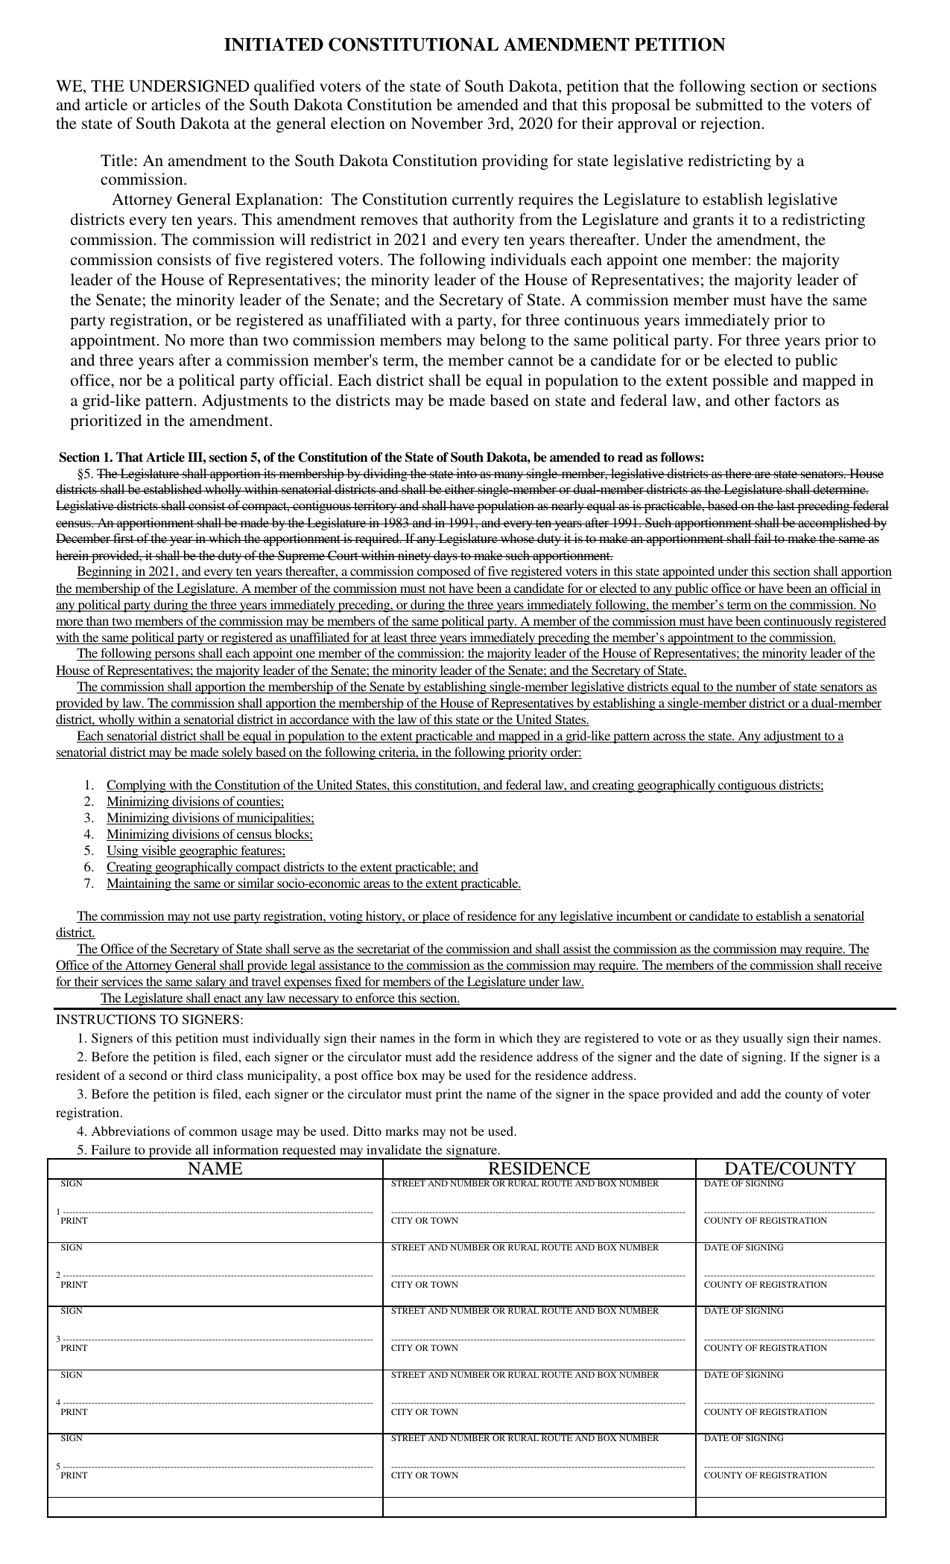 Initiated Constitutional Amendment Petition - South Dakota, Page 1